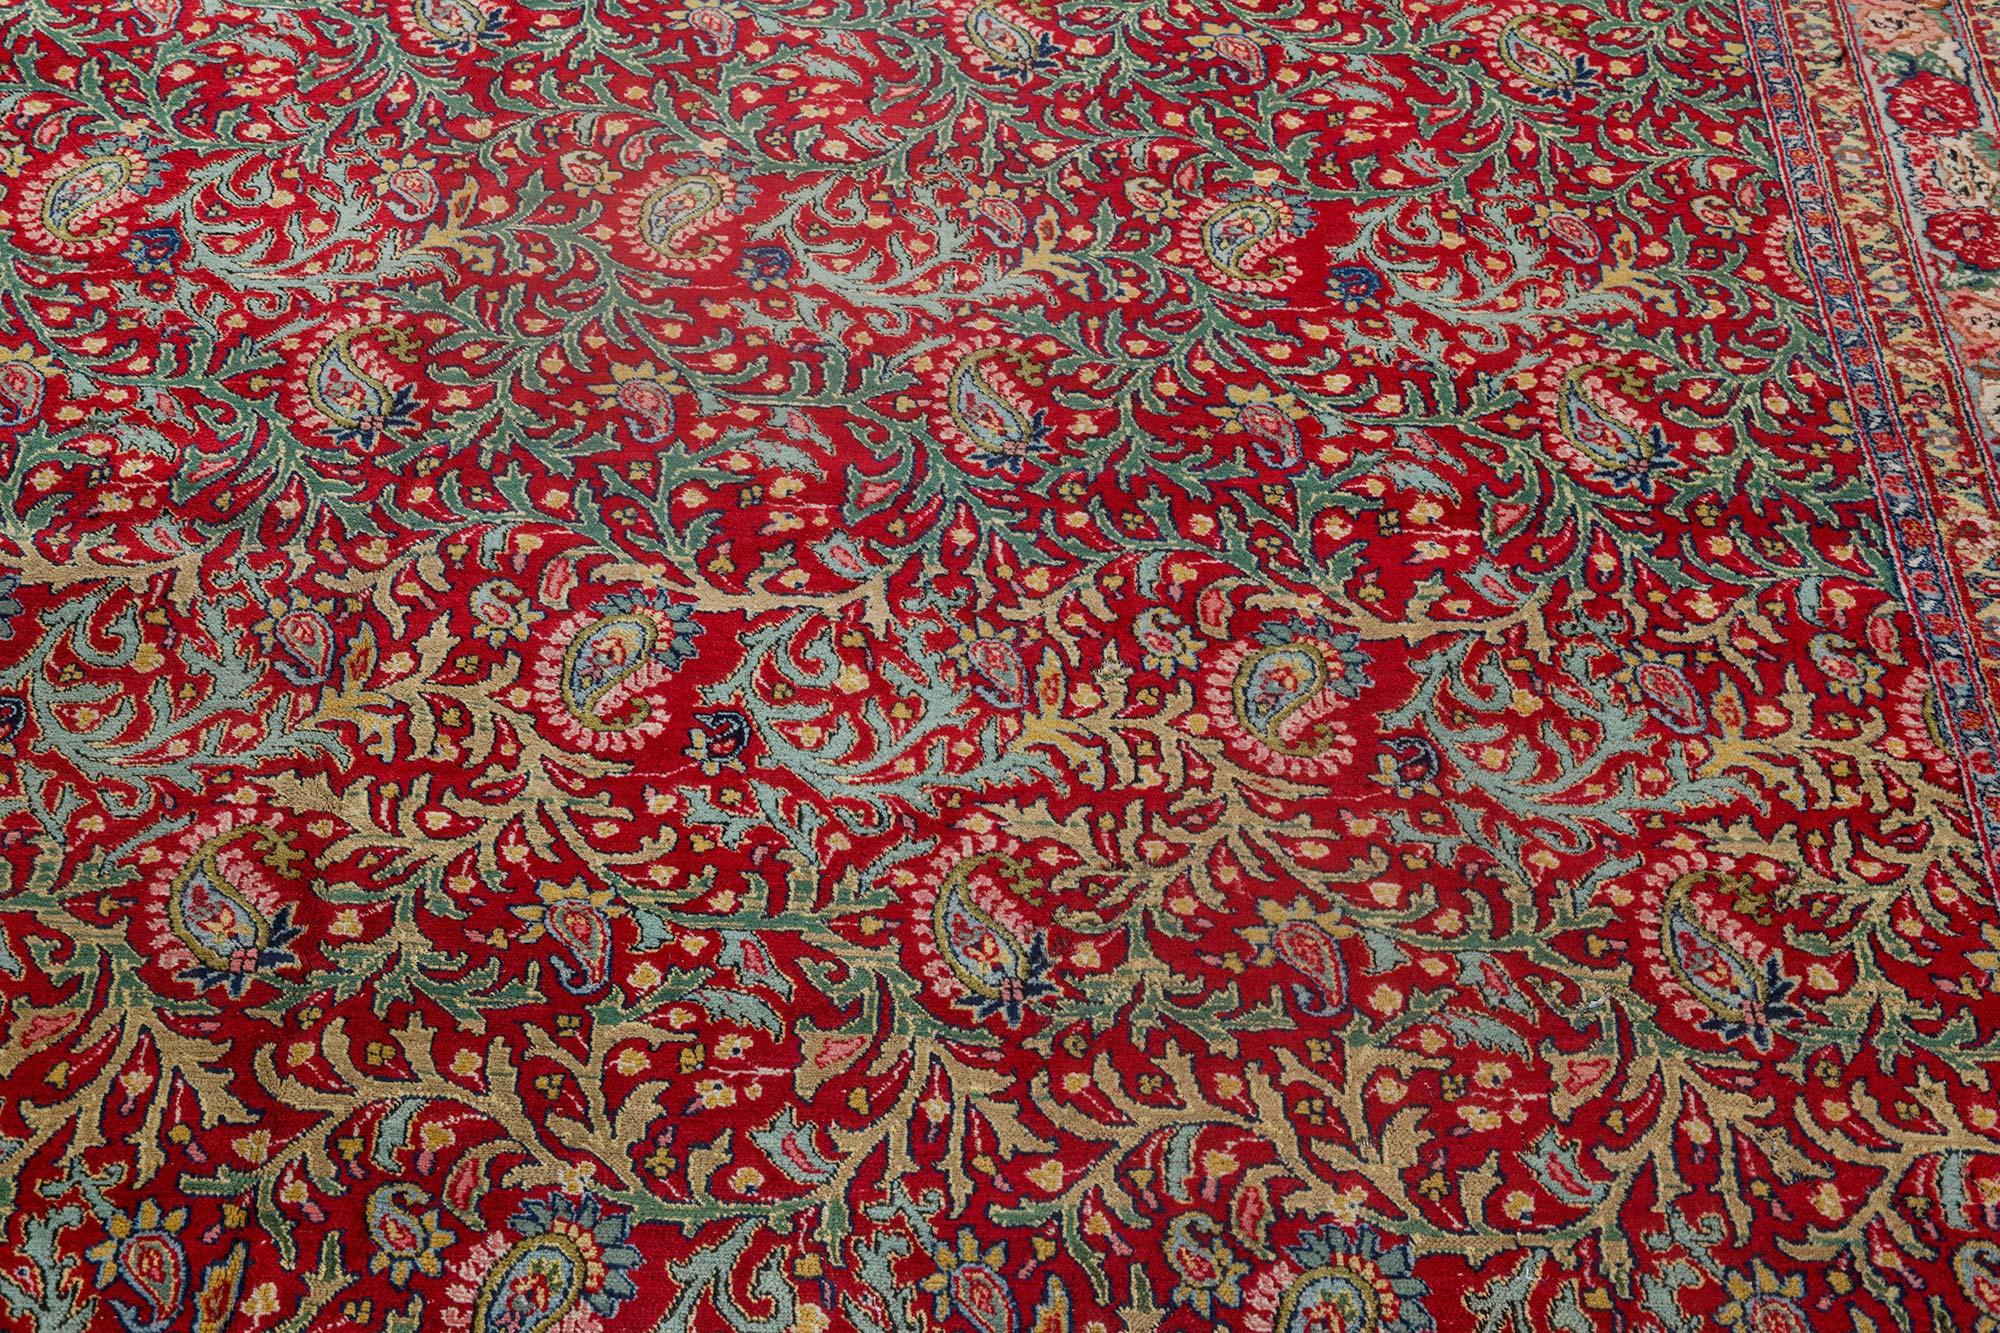 Early 20th century Persian Tabriz red handmade wool carpet
Size: 6'7